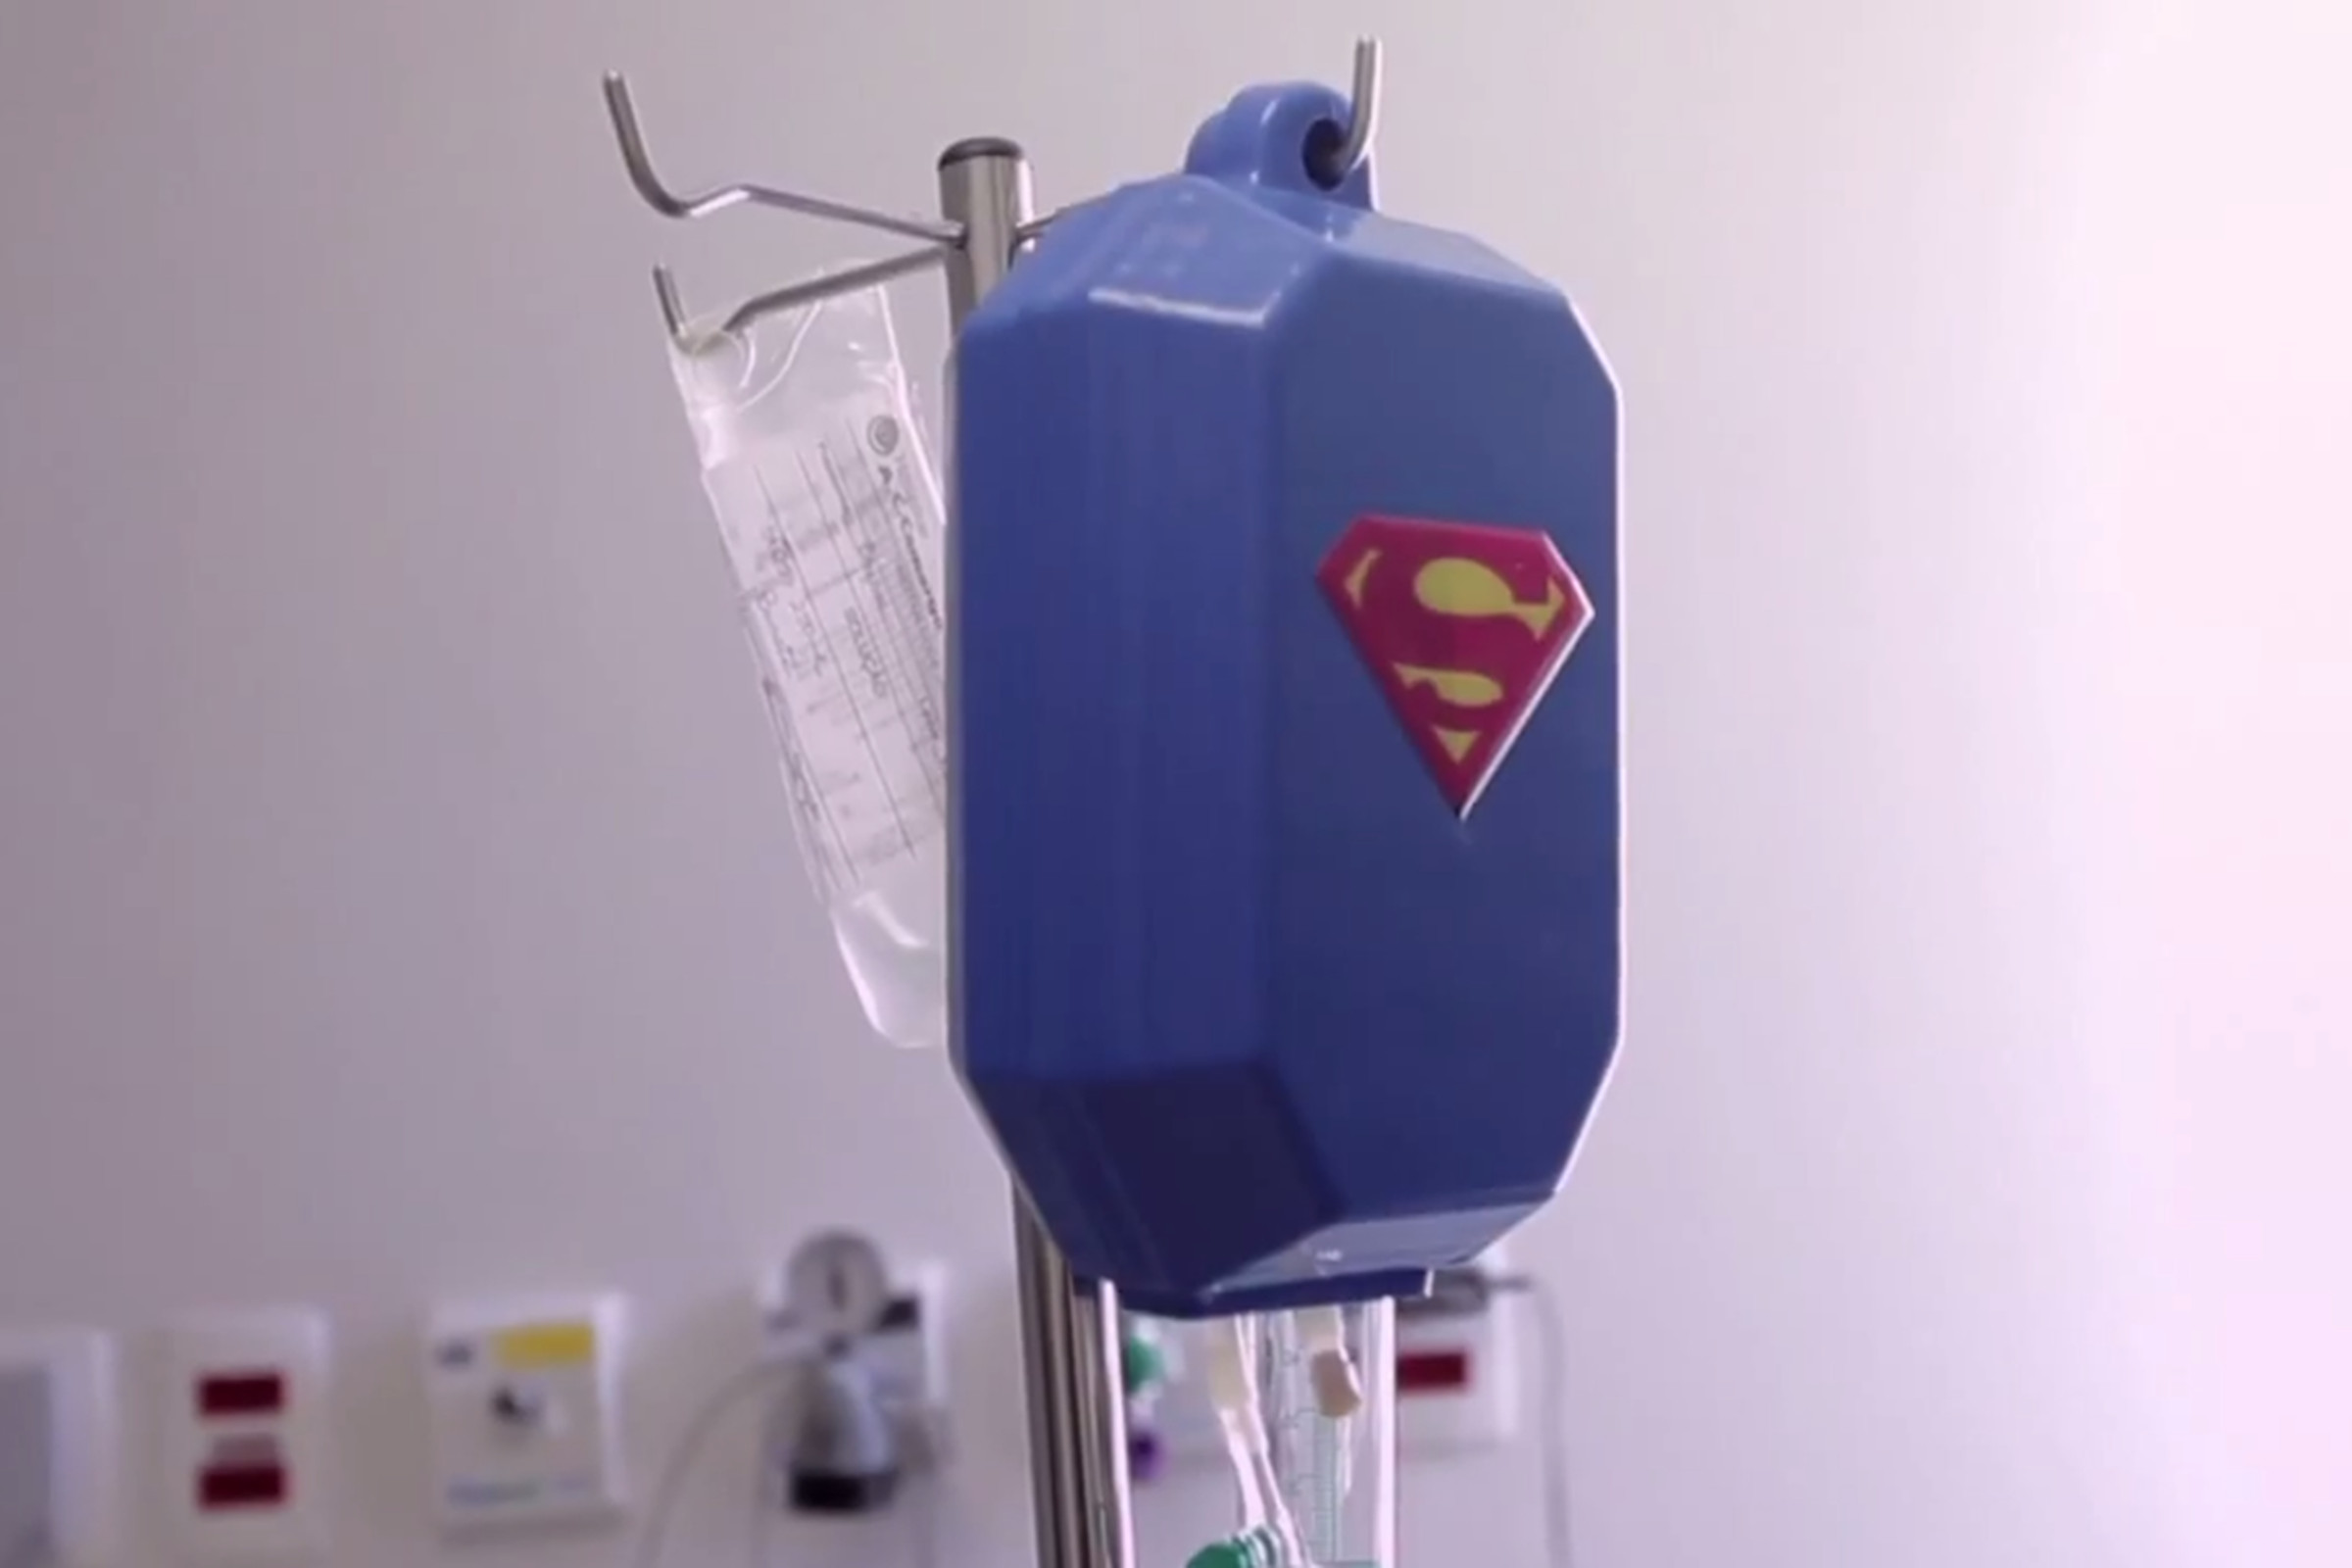 Cancer Center superheroes